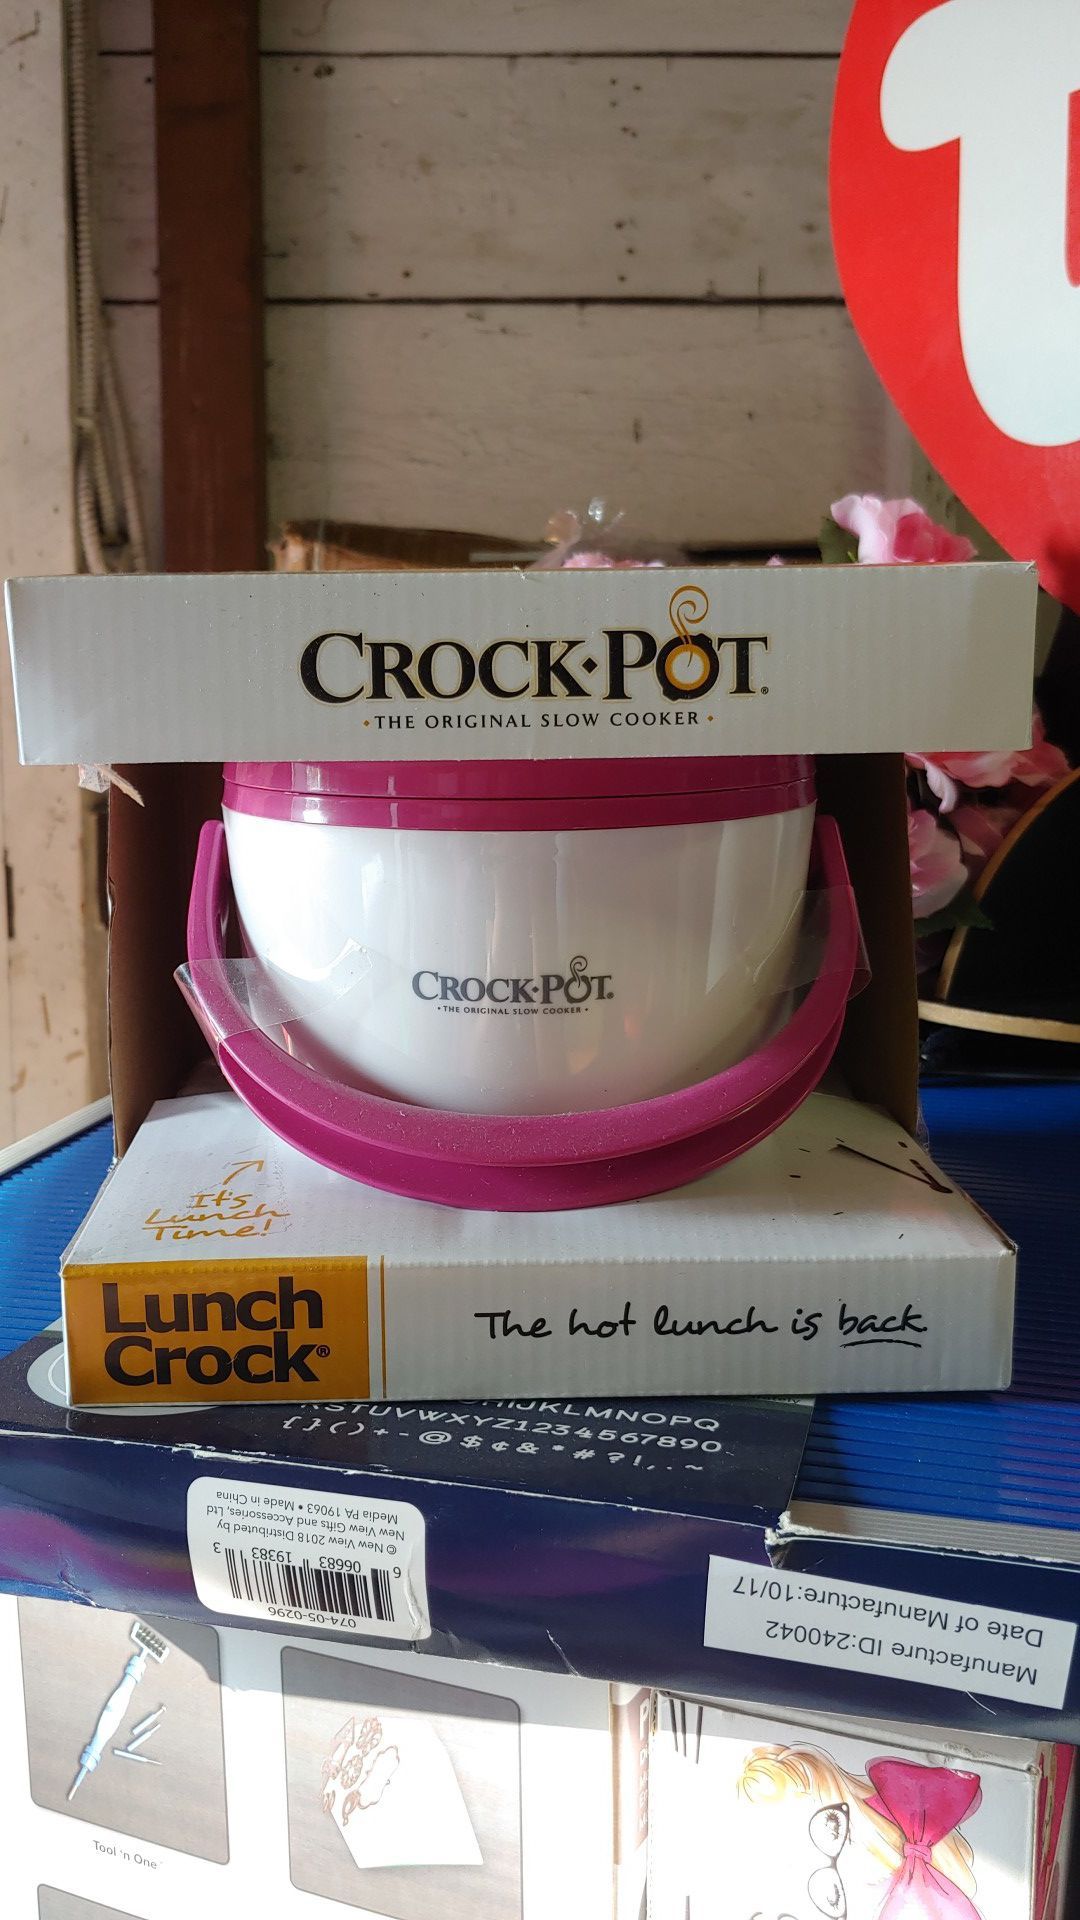 Crock pot lunch crock